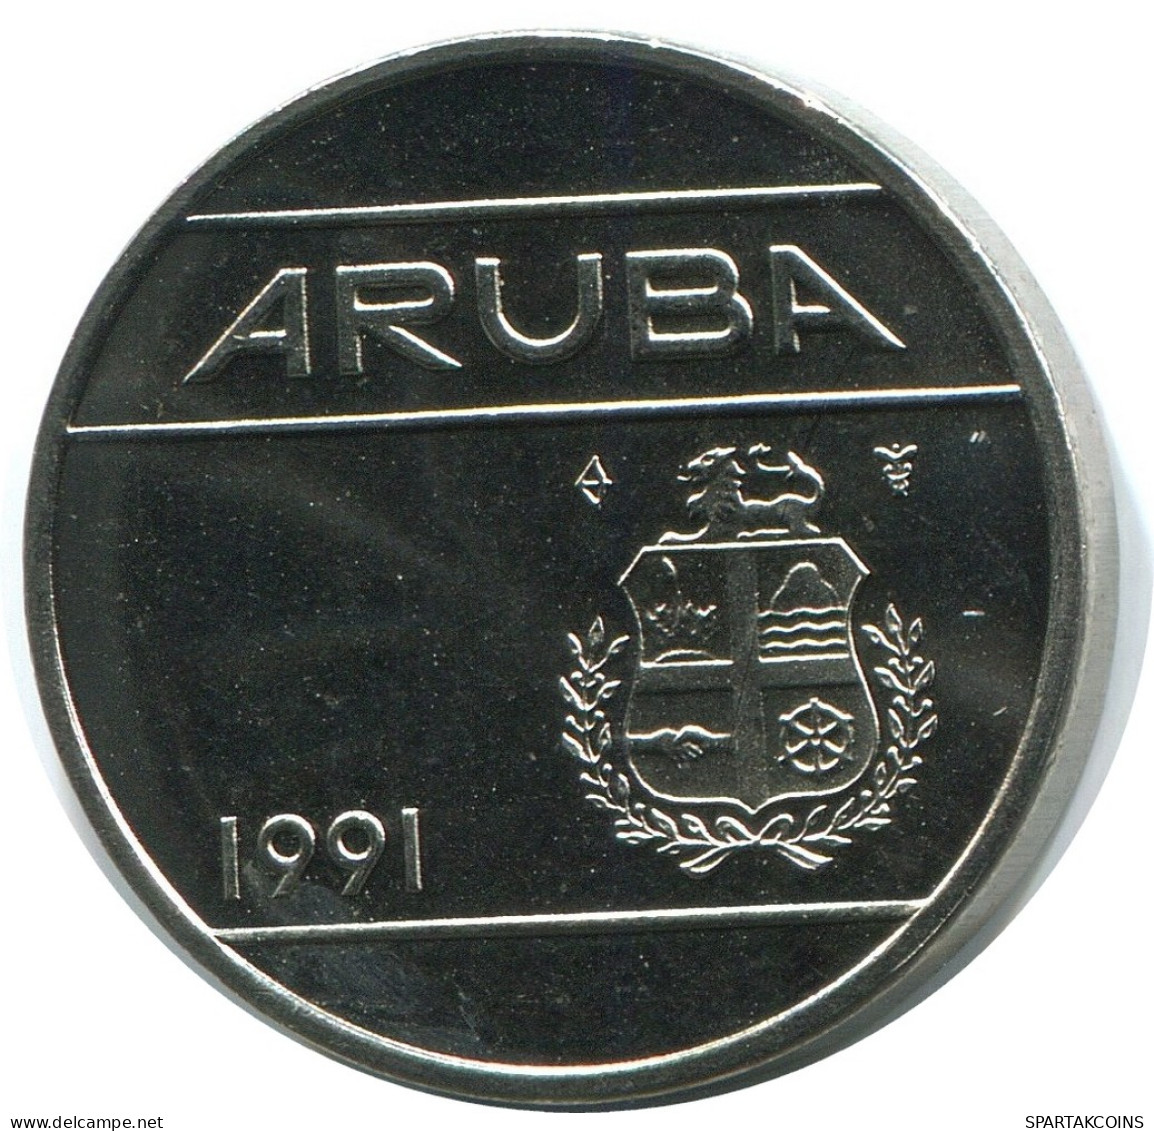 25 CENTS 1991 ARUBA Coin (From BU Mint Set) #AH068.U - Aruba